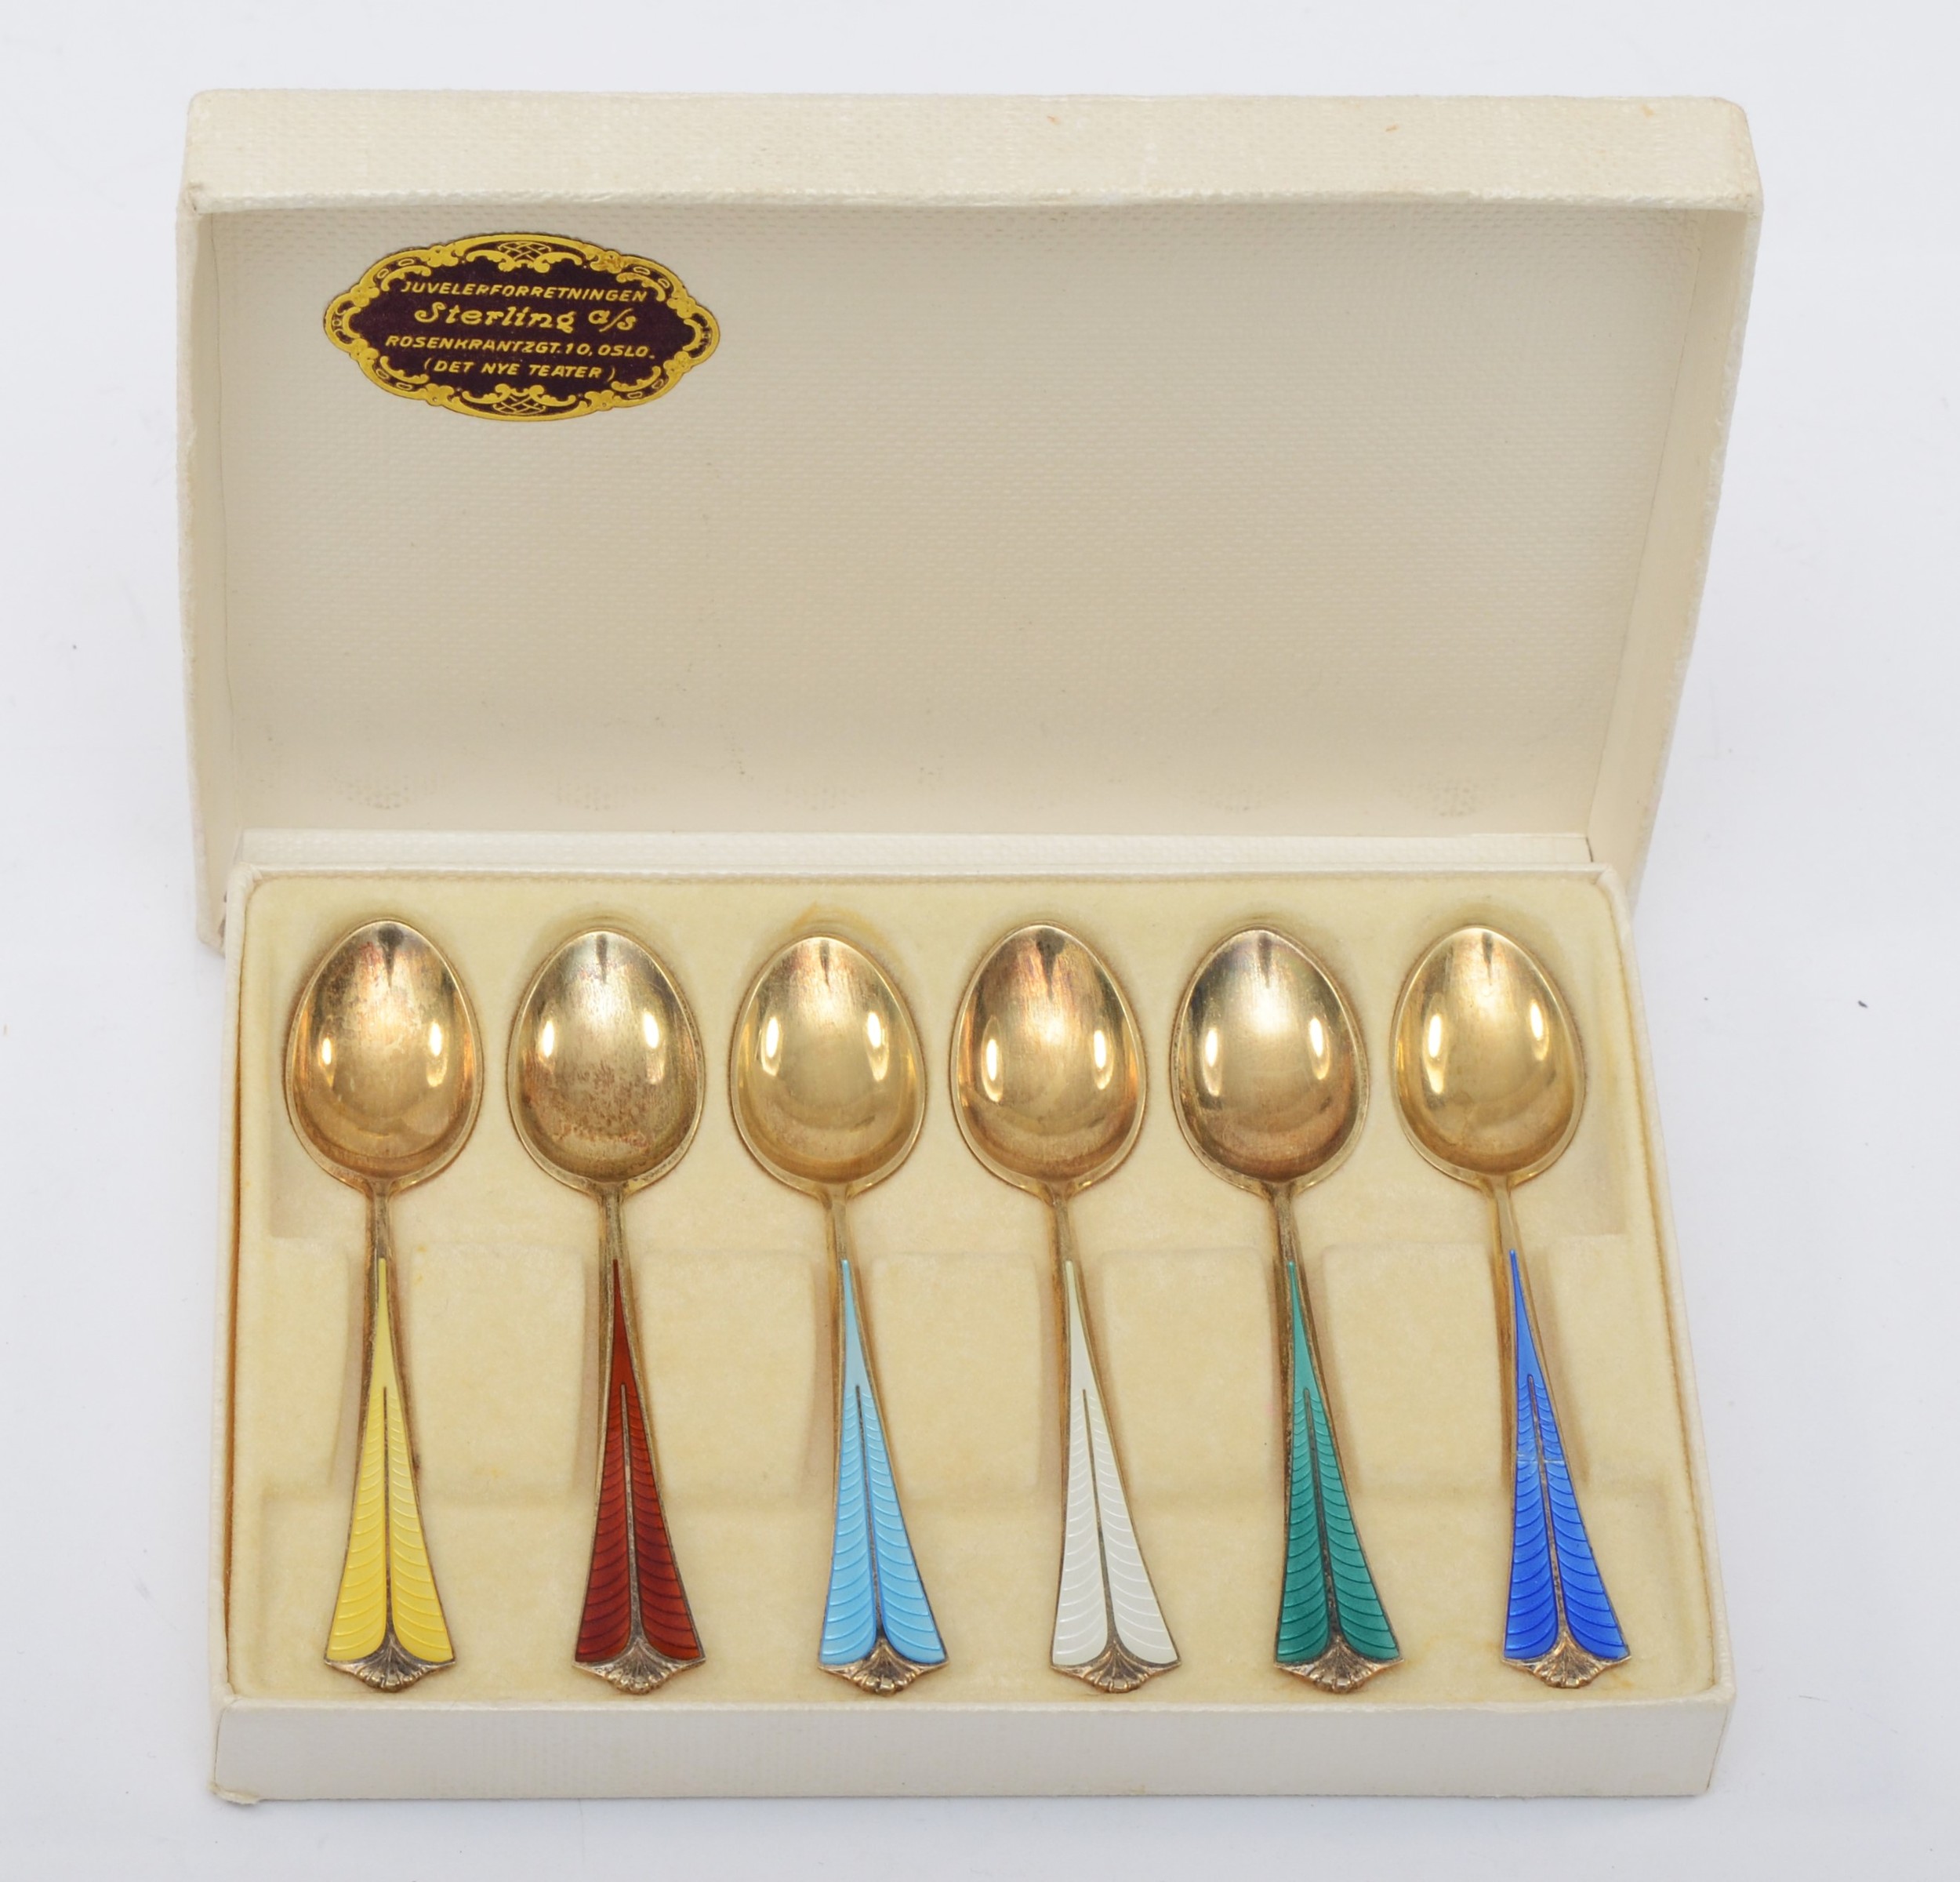 David Anderson, a Norwegian set of silver gilt and enamel coffee spoons, 57gm, original receipt